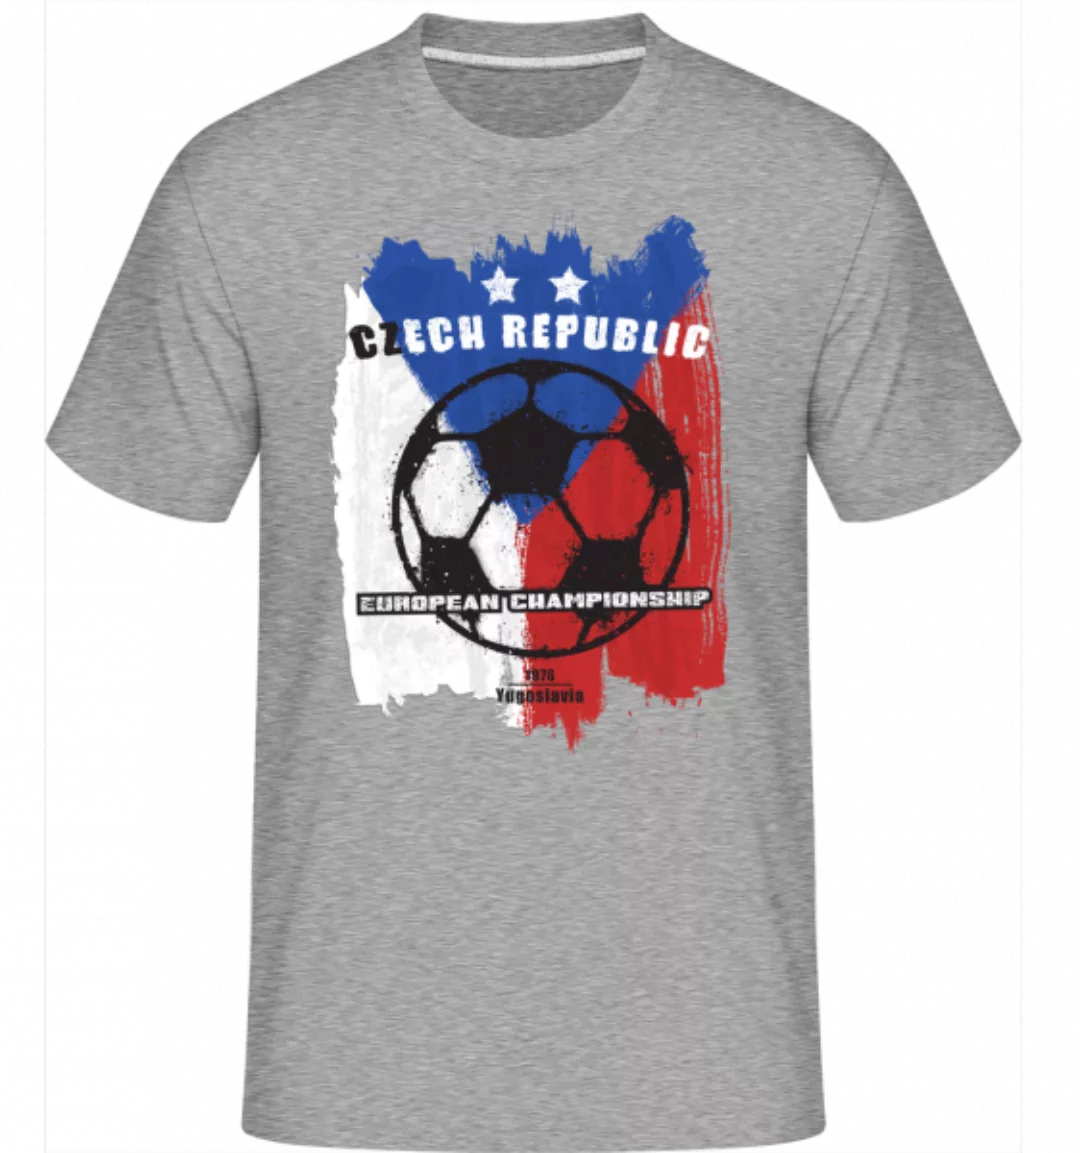 Fußball Tschechien · Shirtinator Männer T-Shirt günstig online kaufen